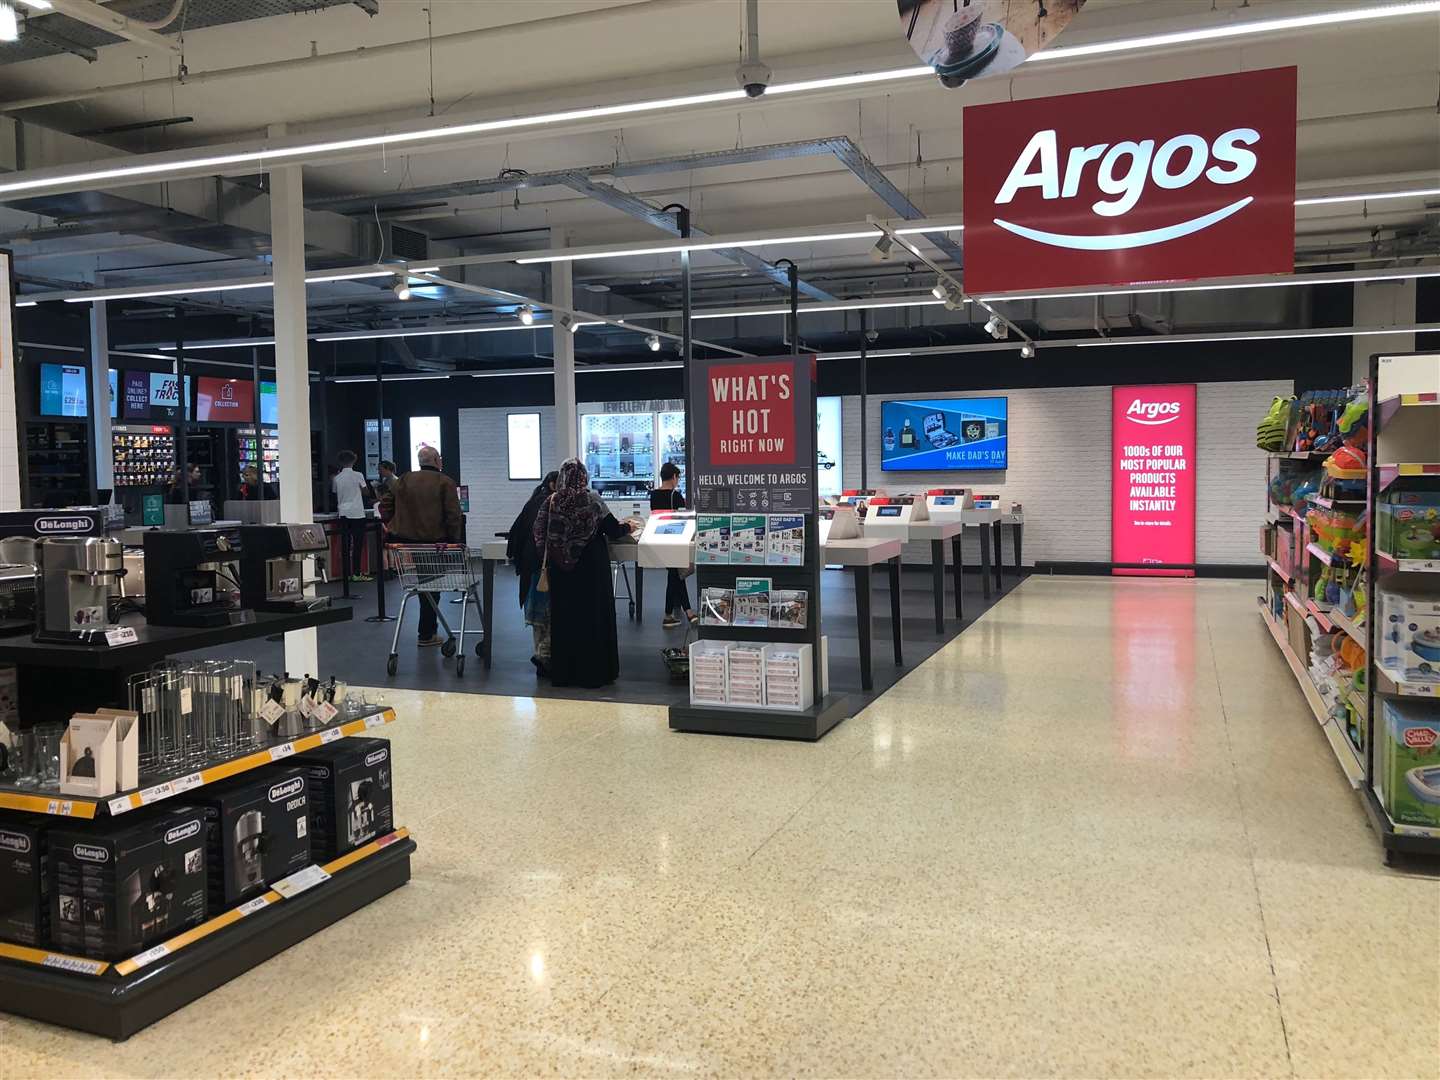 Argos' future is inside Sainsbury's supermarkets